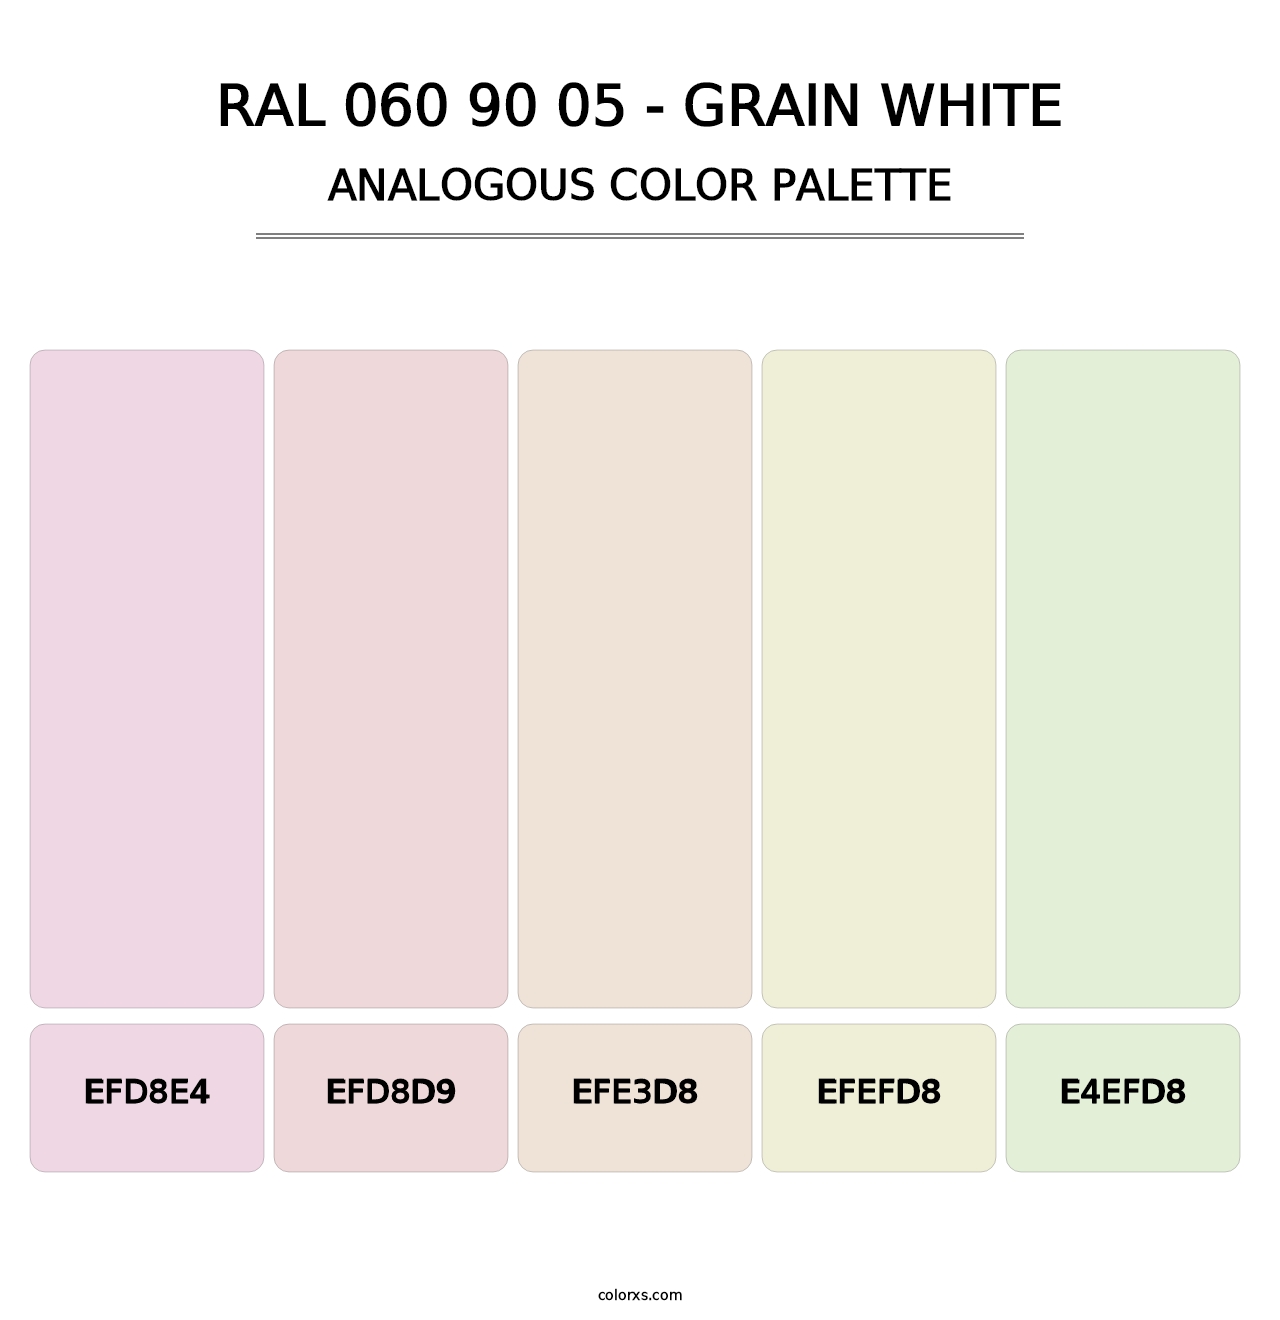 RAL 060 90 05 - Grain White - Analogous Color Palette